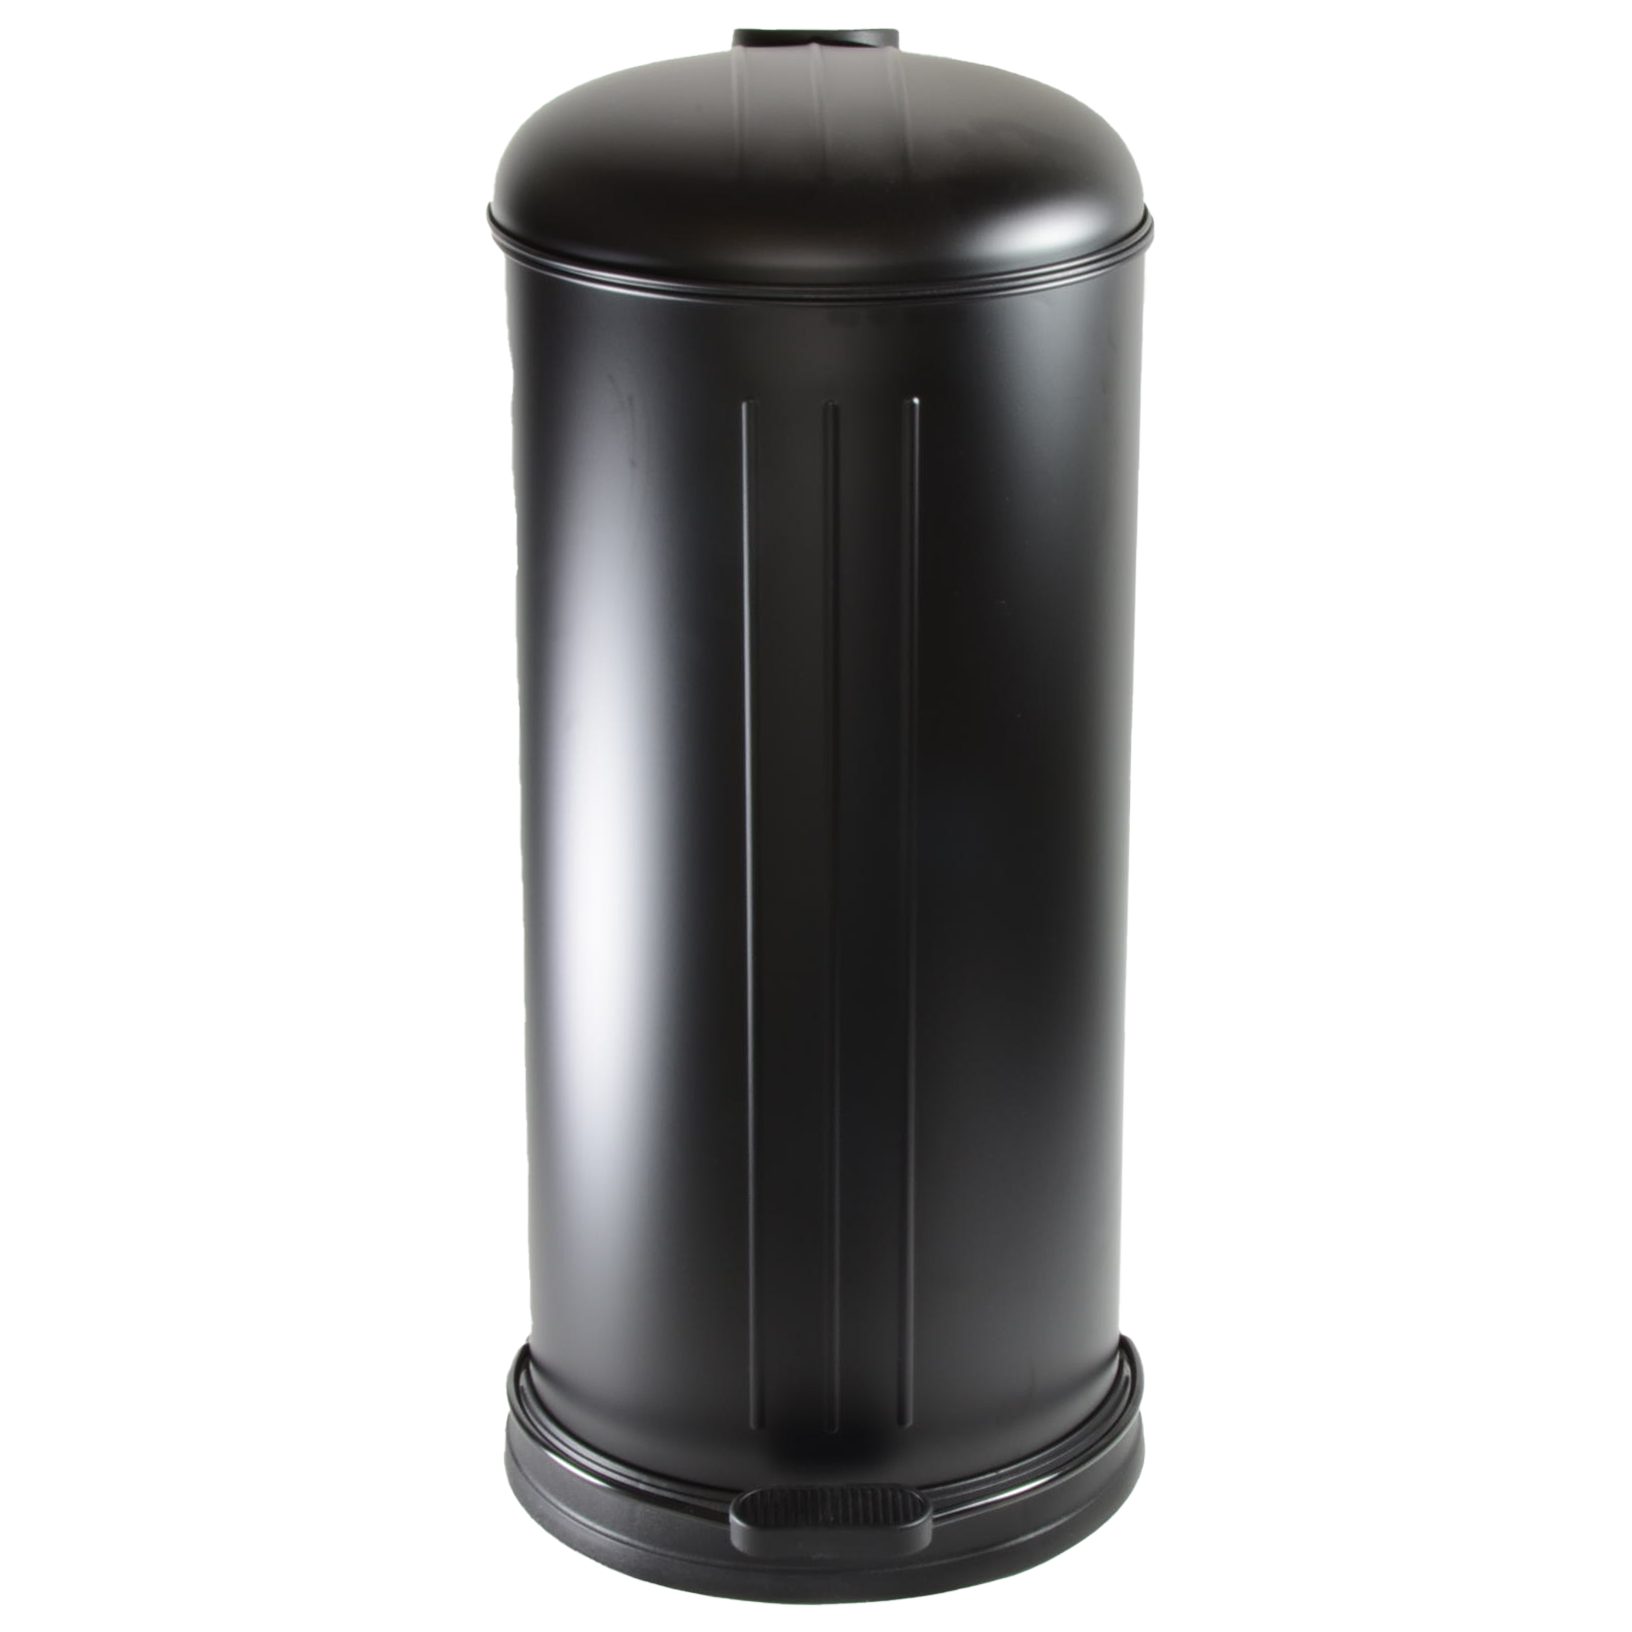 B&S Mülleimer 30 Liter Abfalleimer Treteimer Metall schwarz matt mit Absenkautomatik, mit Absenkautomatik